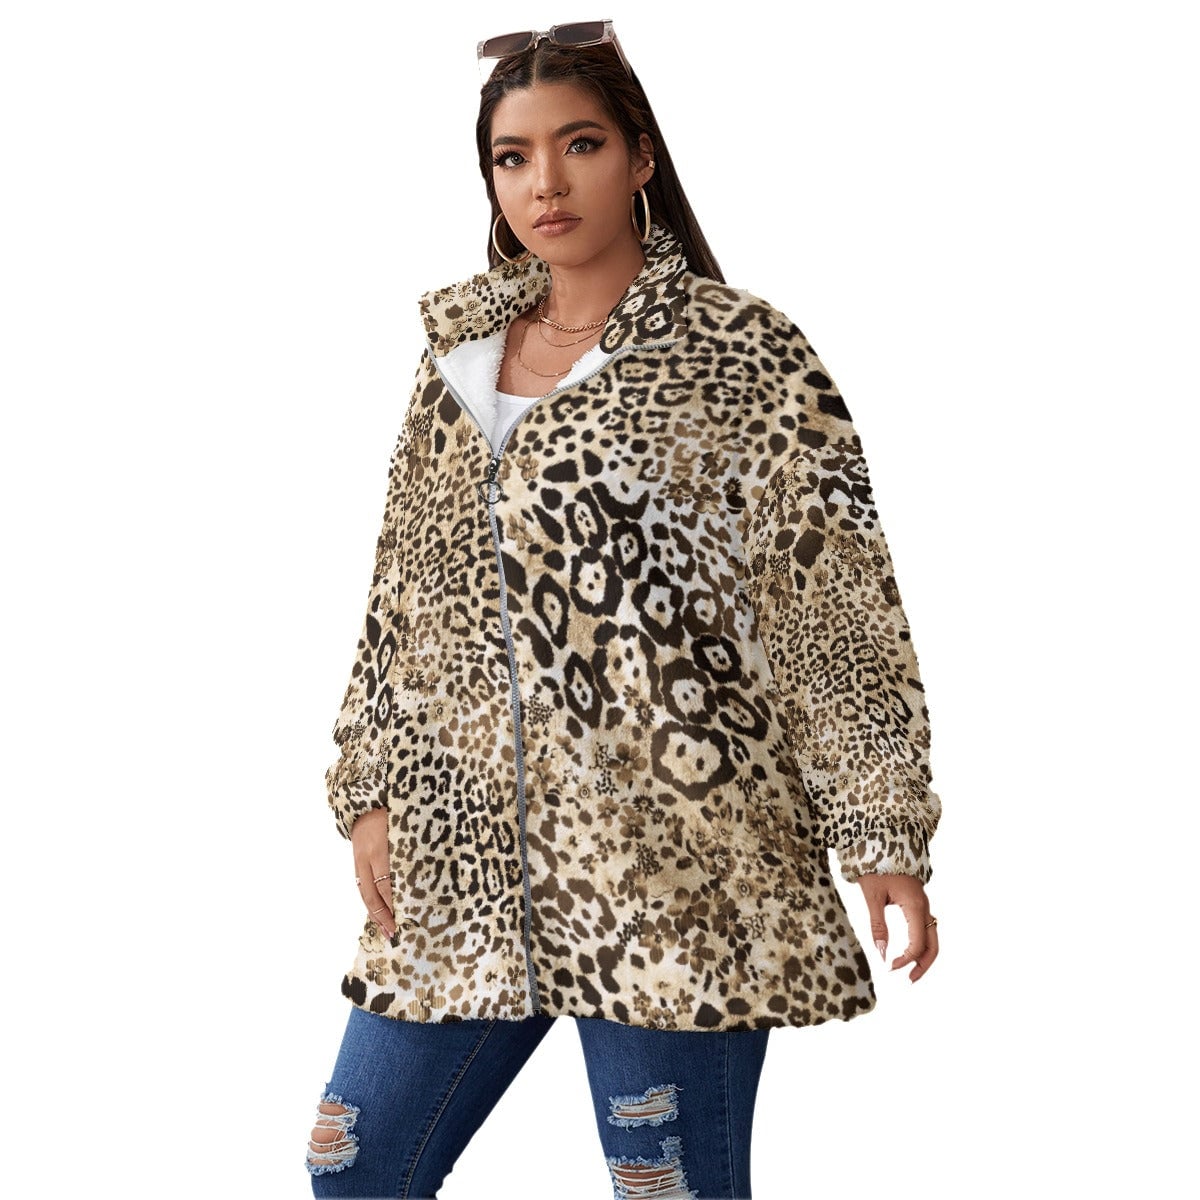 Leopard Print Classy Art Women’s Borg Fleece Oversize Jacket